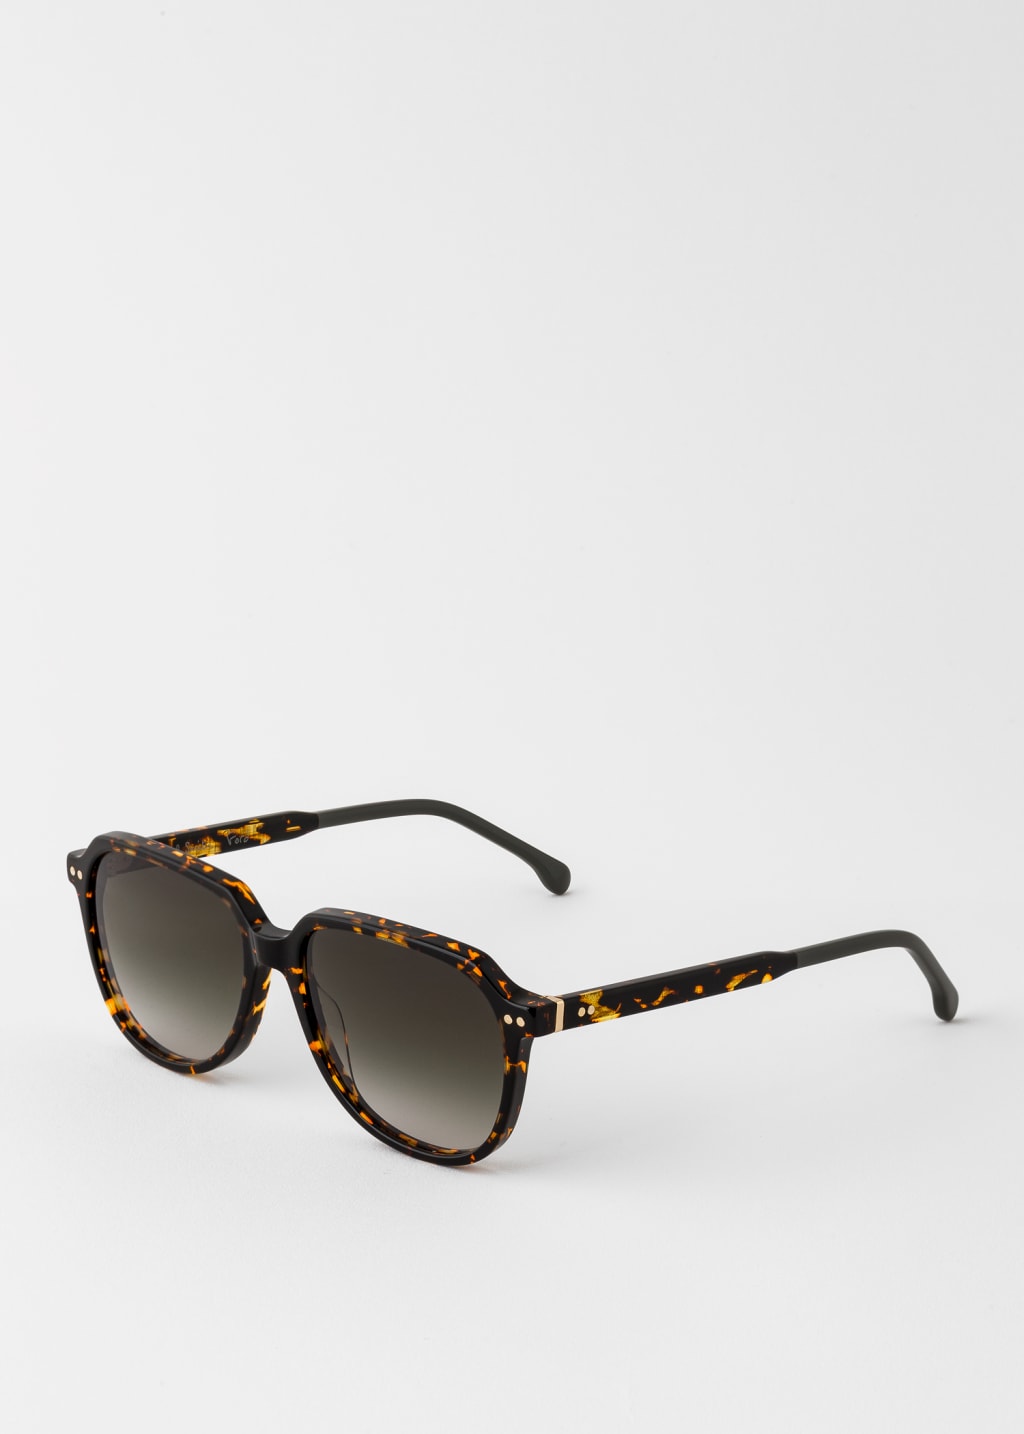 Product view - Havana Khaki 'Ford' Sunglasses Paul Smith